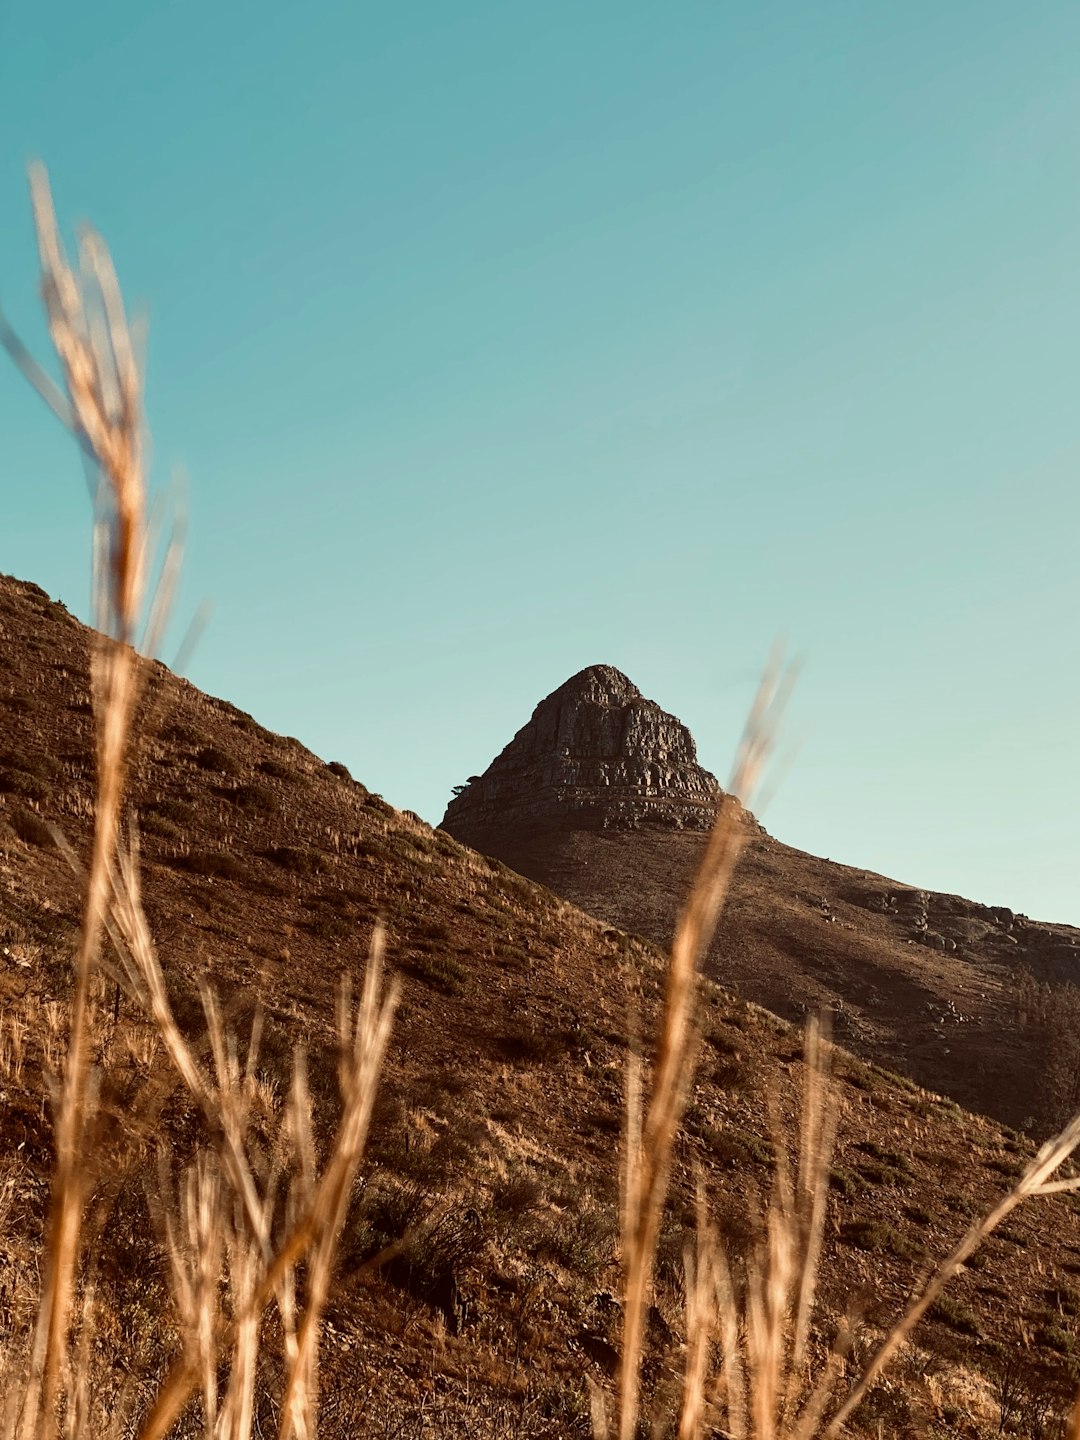 Hill photo spot Table Mountain National Park Villiersdorp